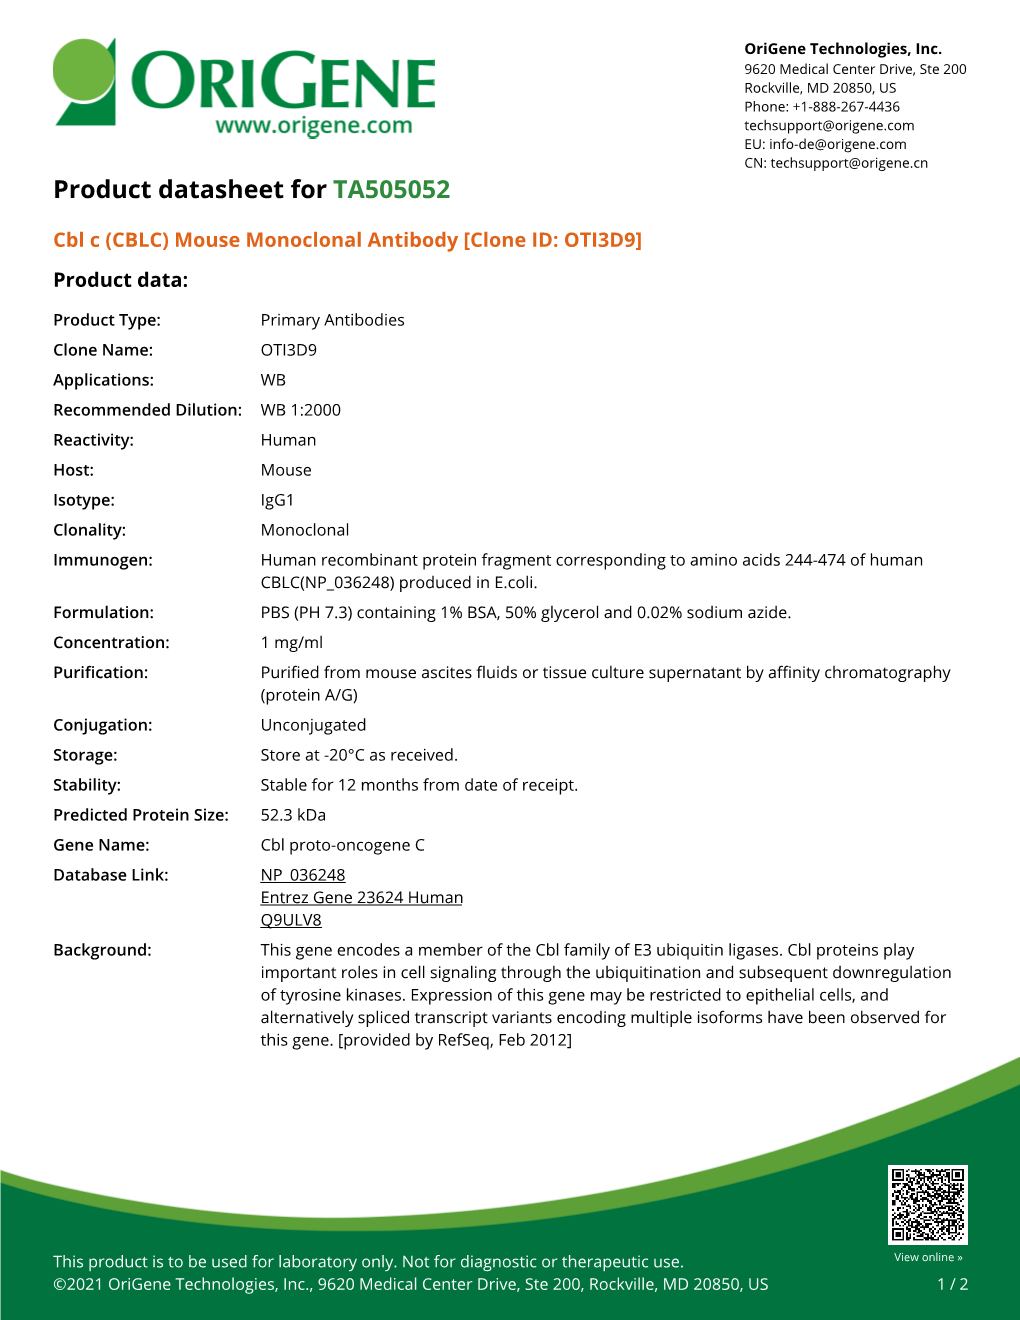 Cbl C (CBLC) Mouse Monoclonal Antibody [Clone ID: OTI3D9] Product Data